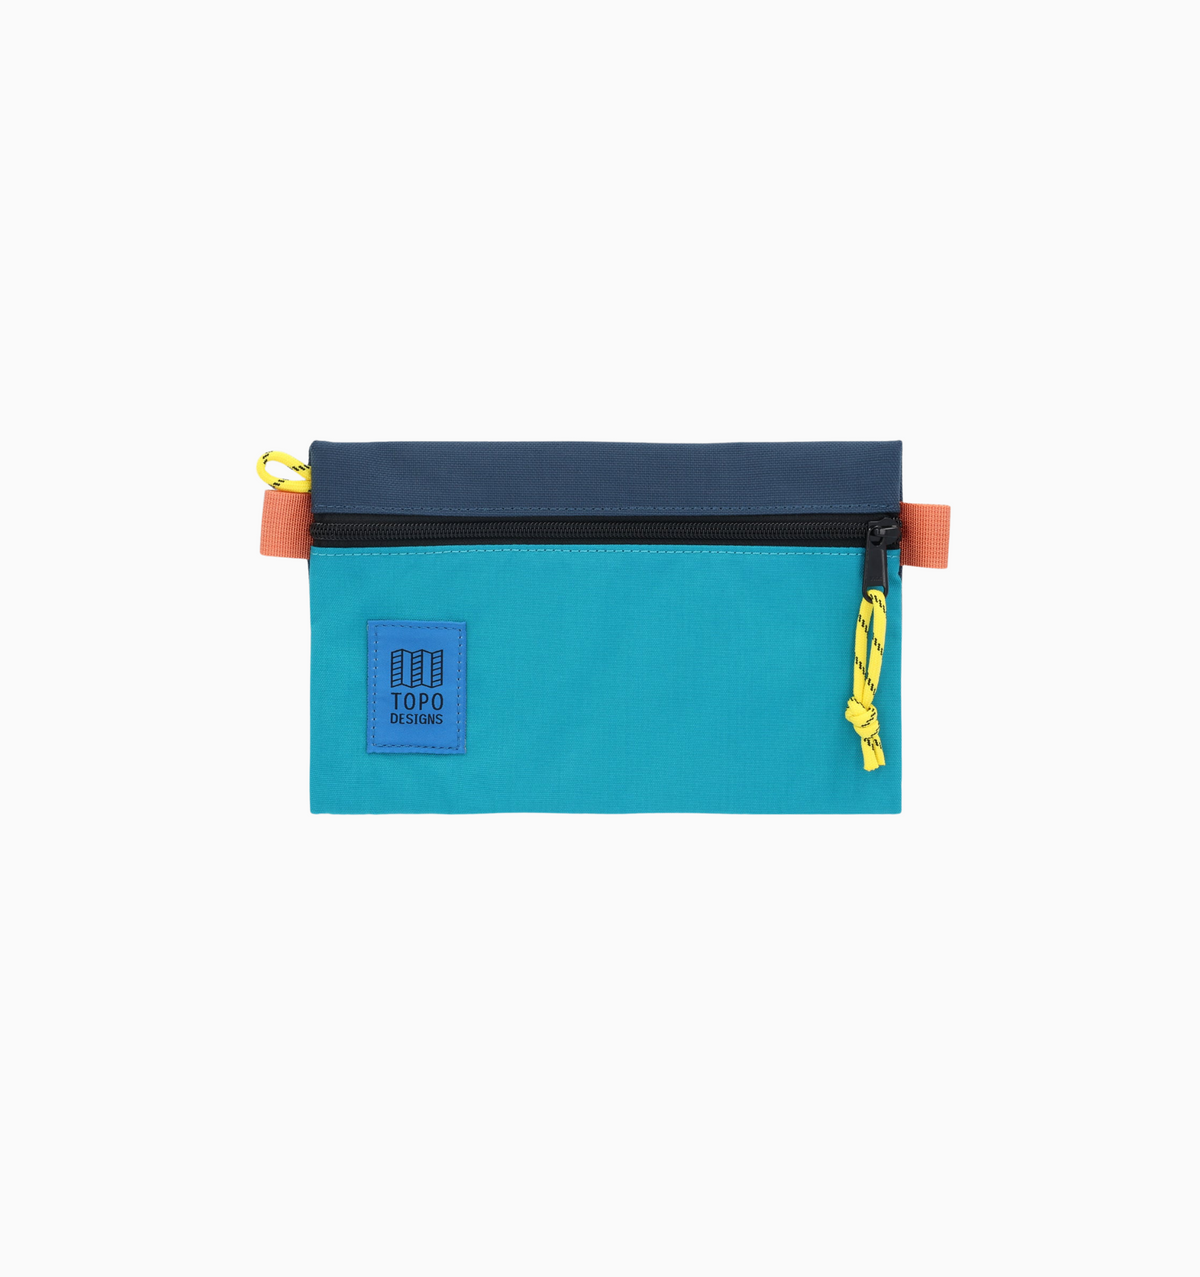 Topo Designs Small Accessory Bag - Tile Blue Pond Blue